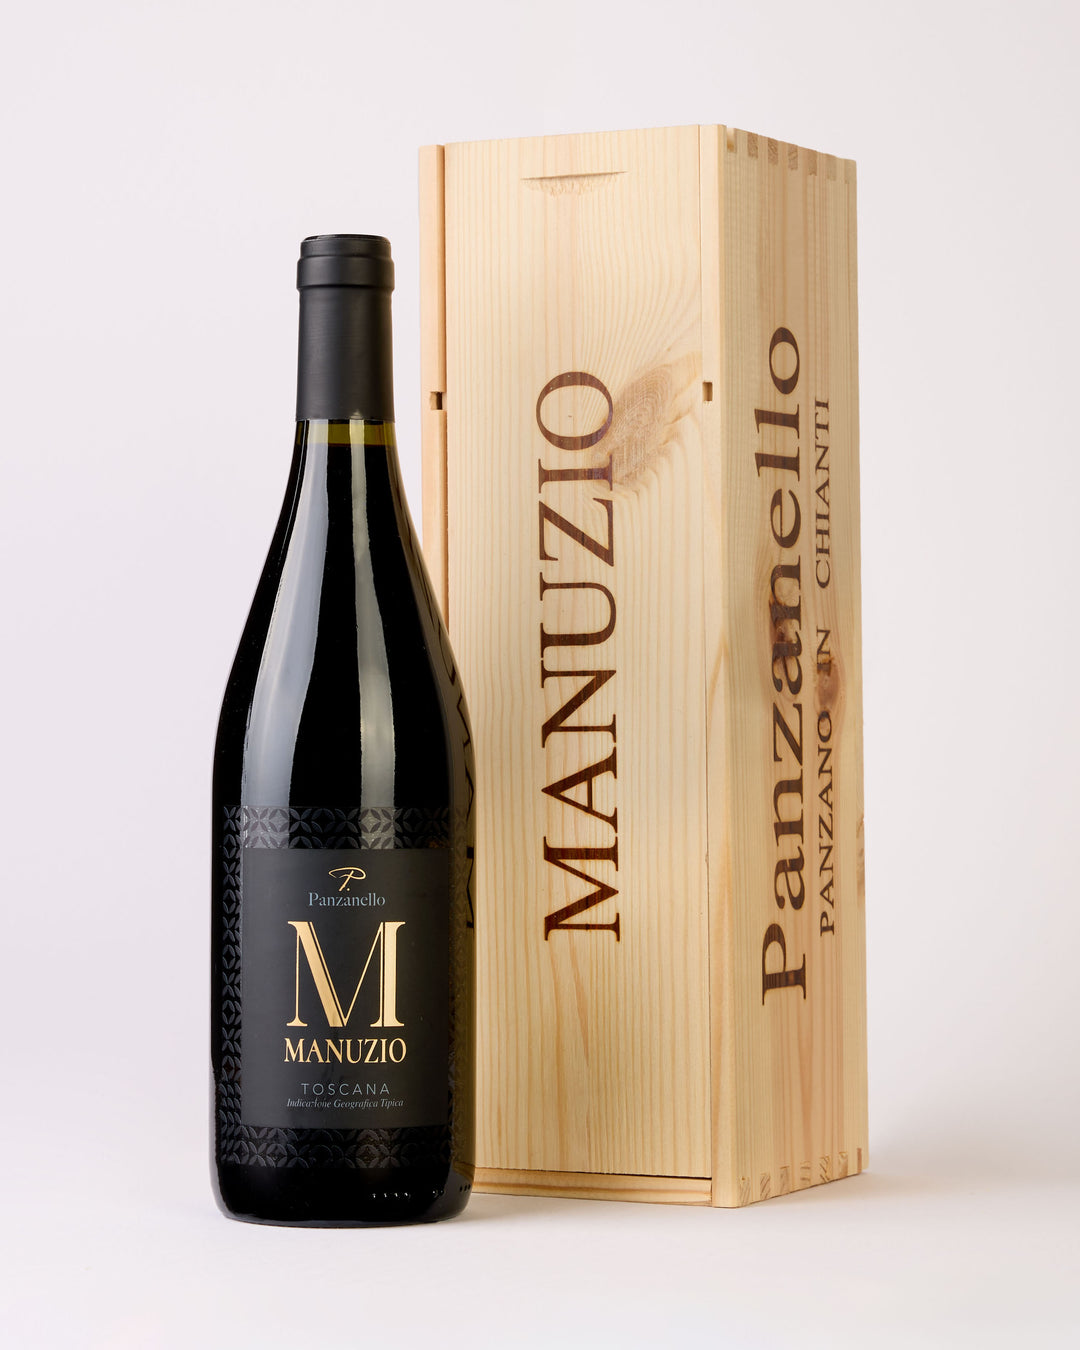 Manuzio 750 ml •. IGT Toscana • 2018